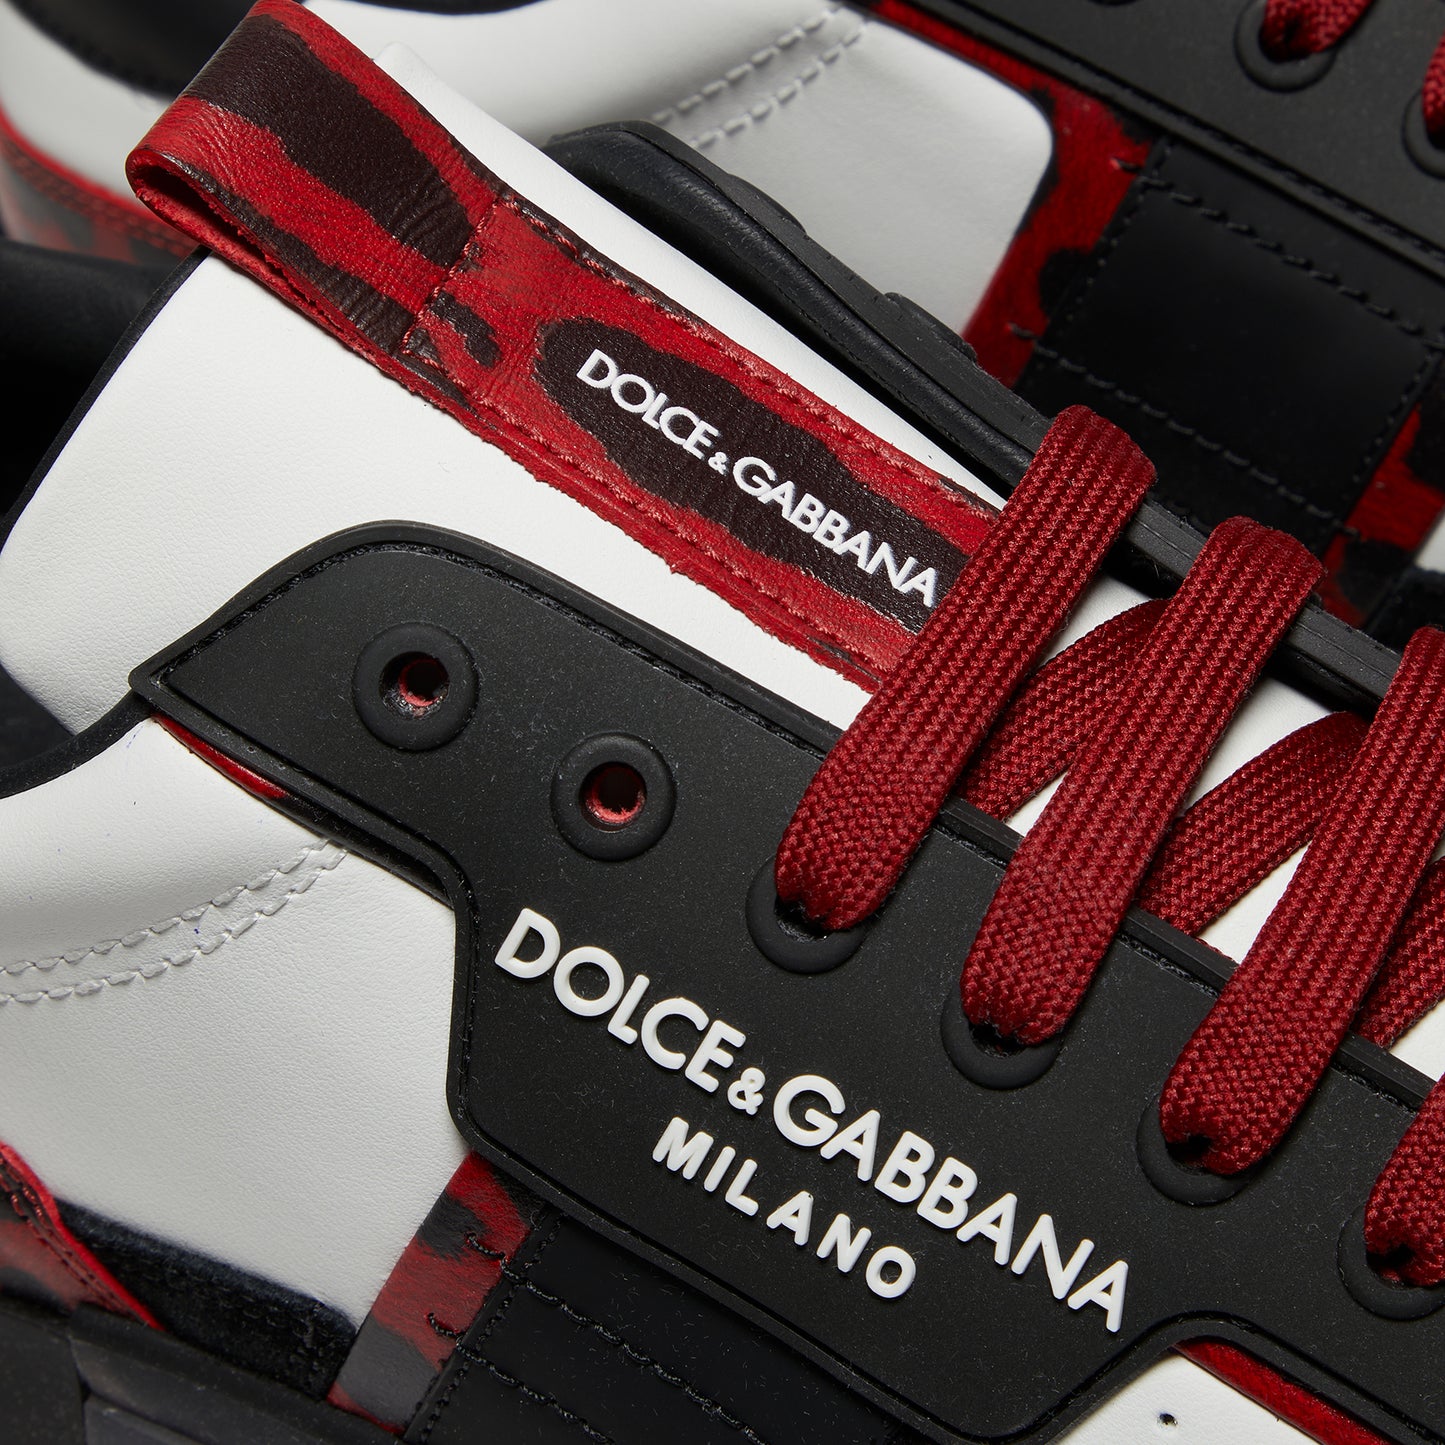 Dolce & Gabbana Custom 2.ZERO Sneaker (Black Leopard/Red)